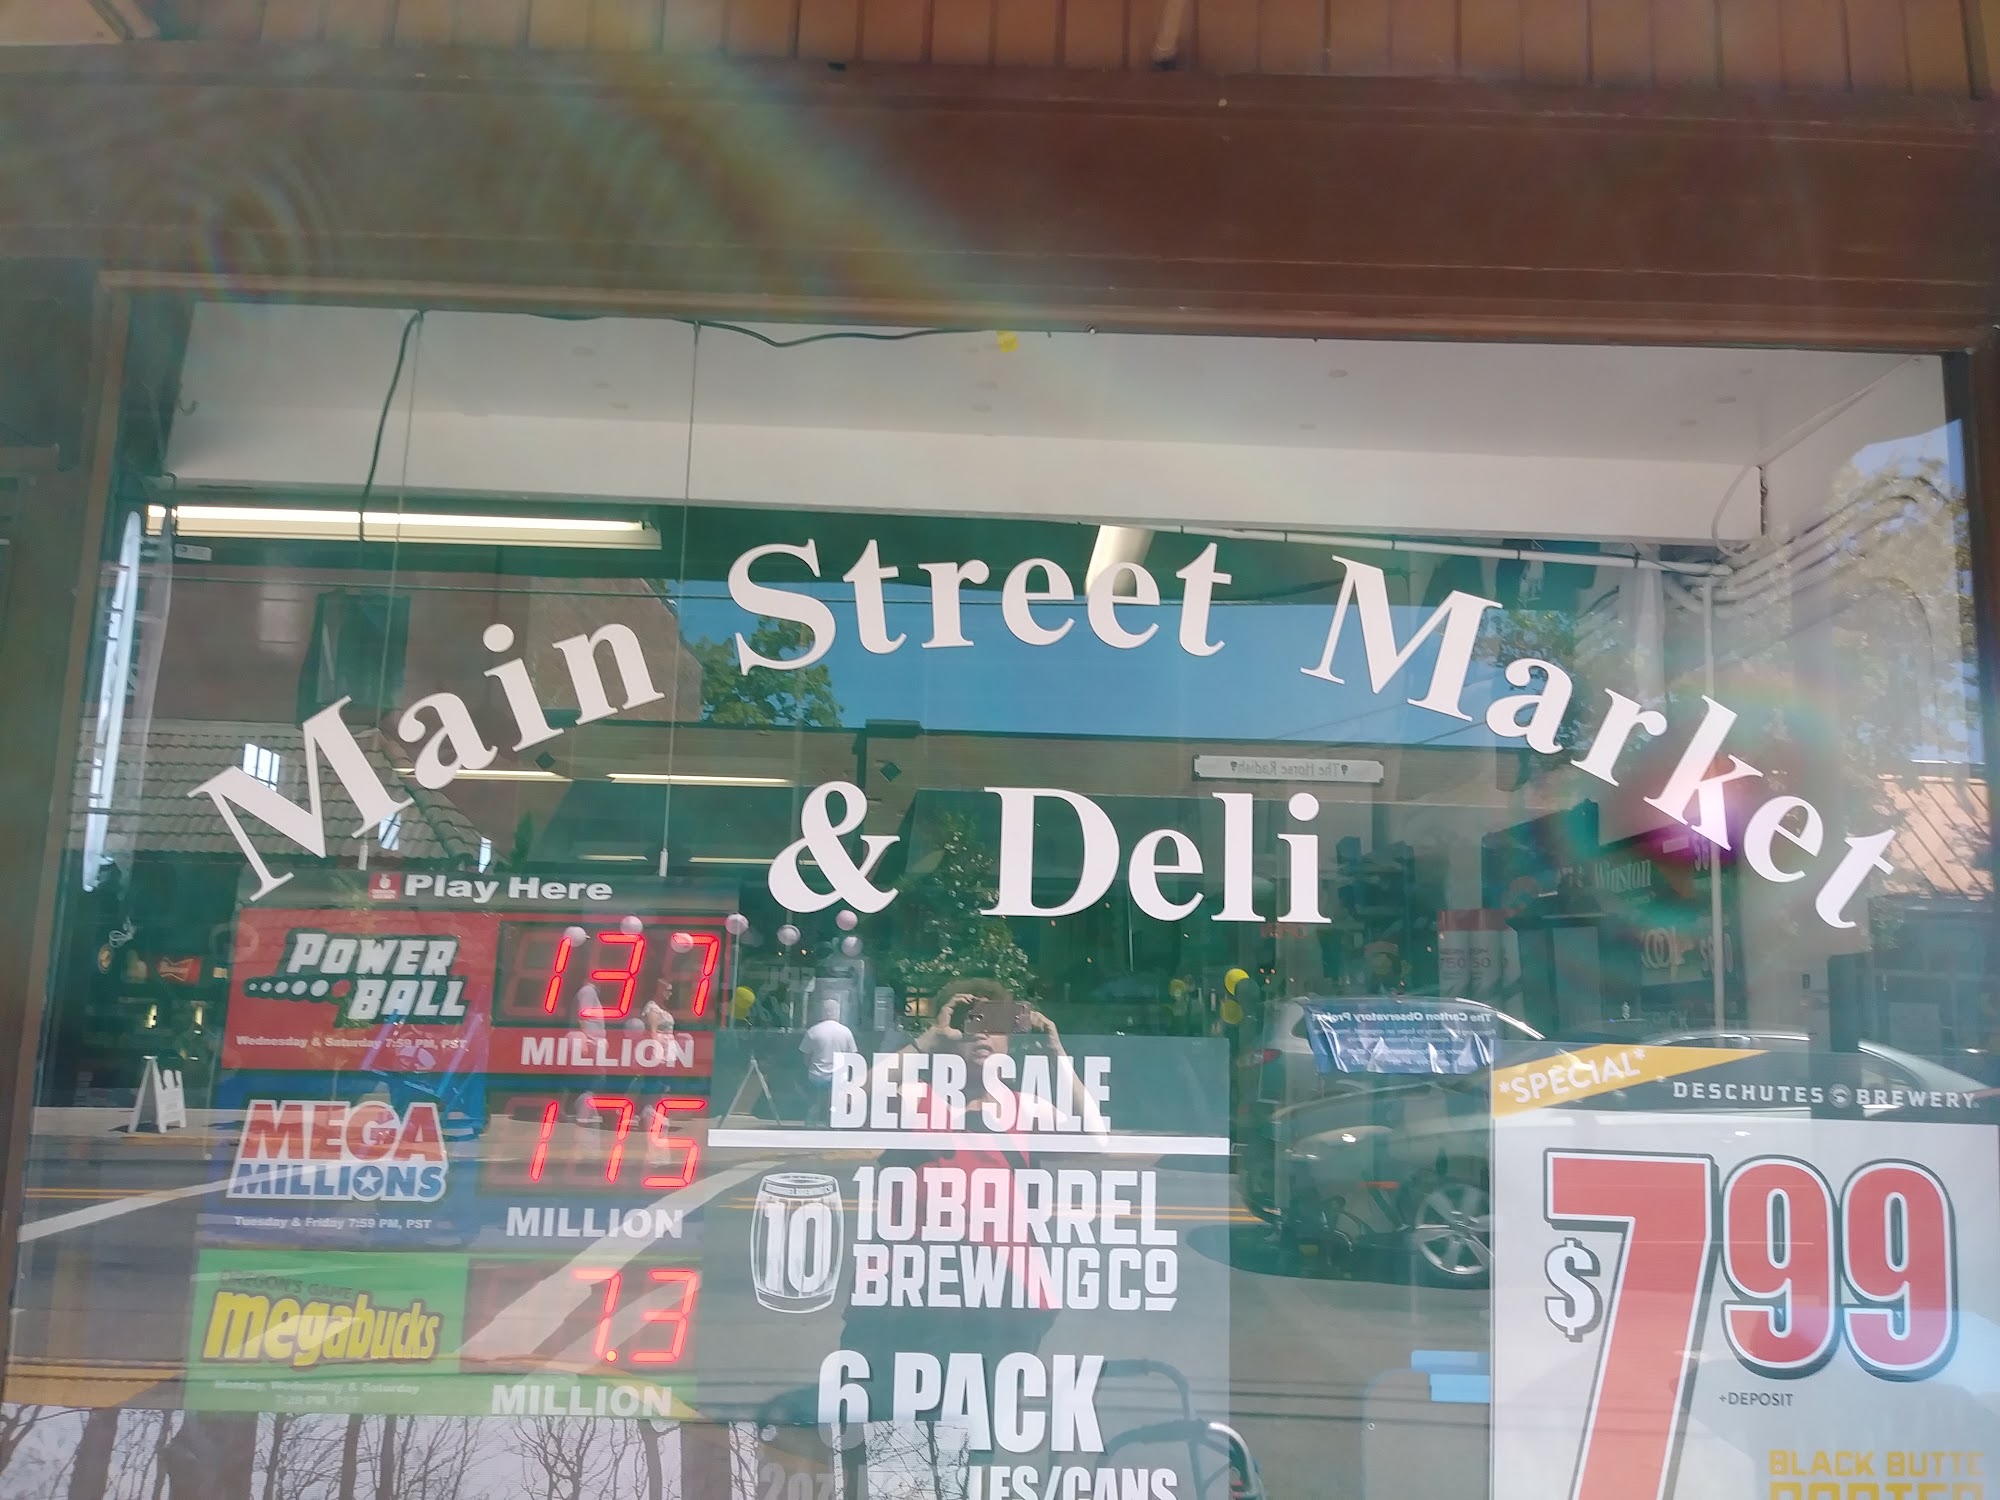 Main Street Market & Deli